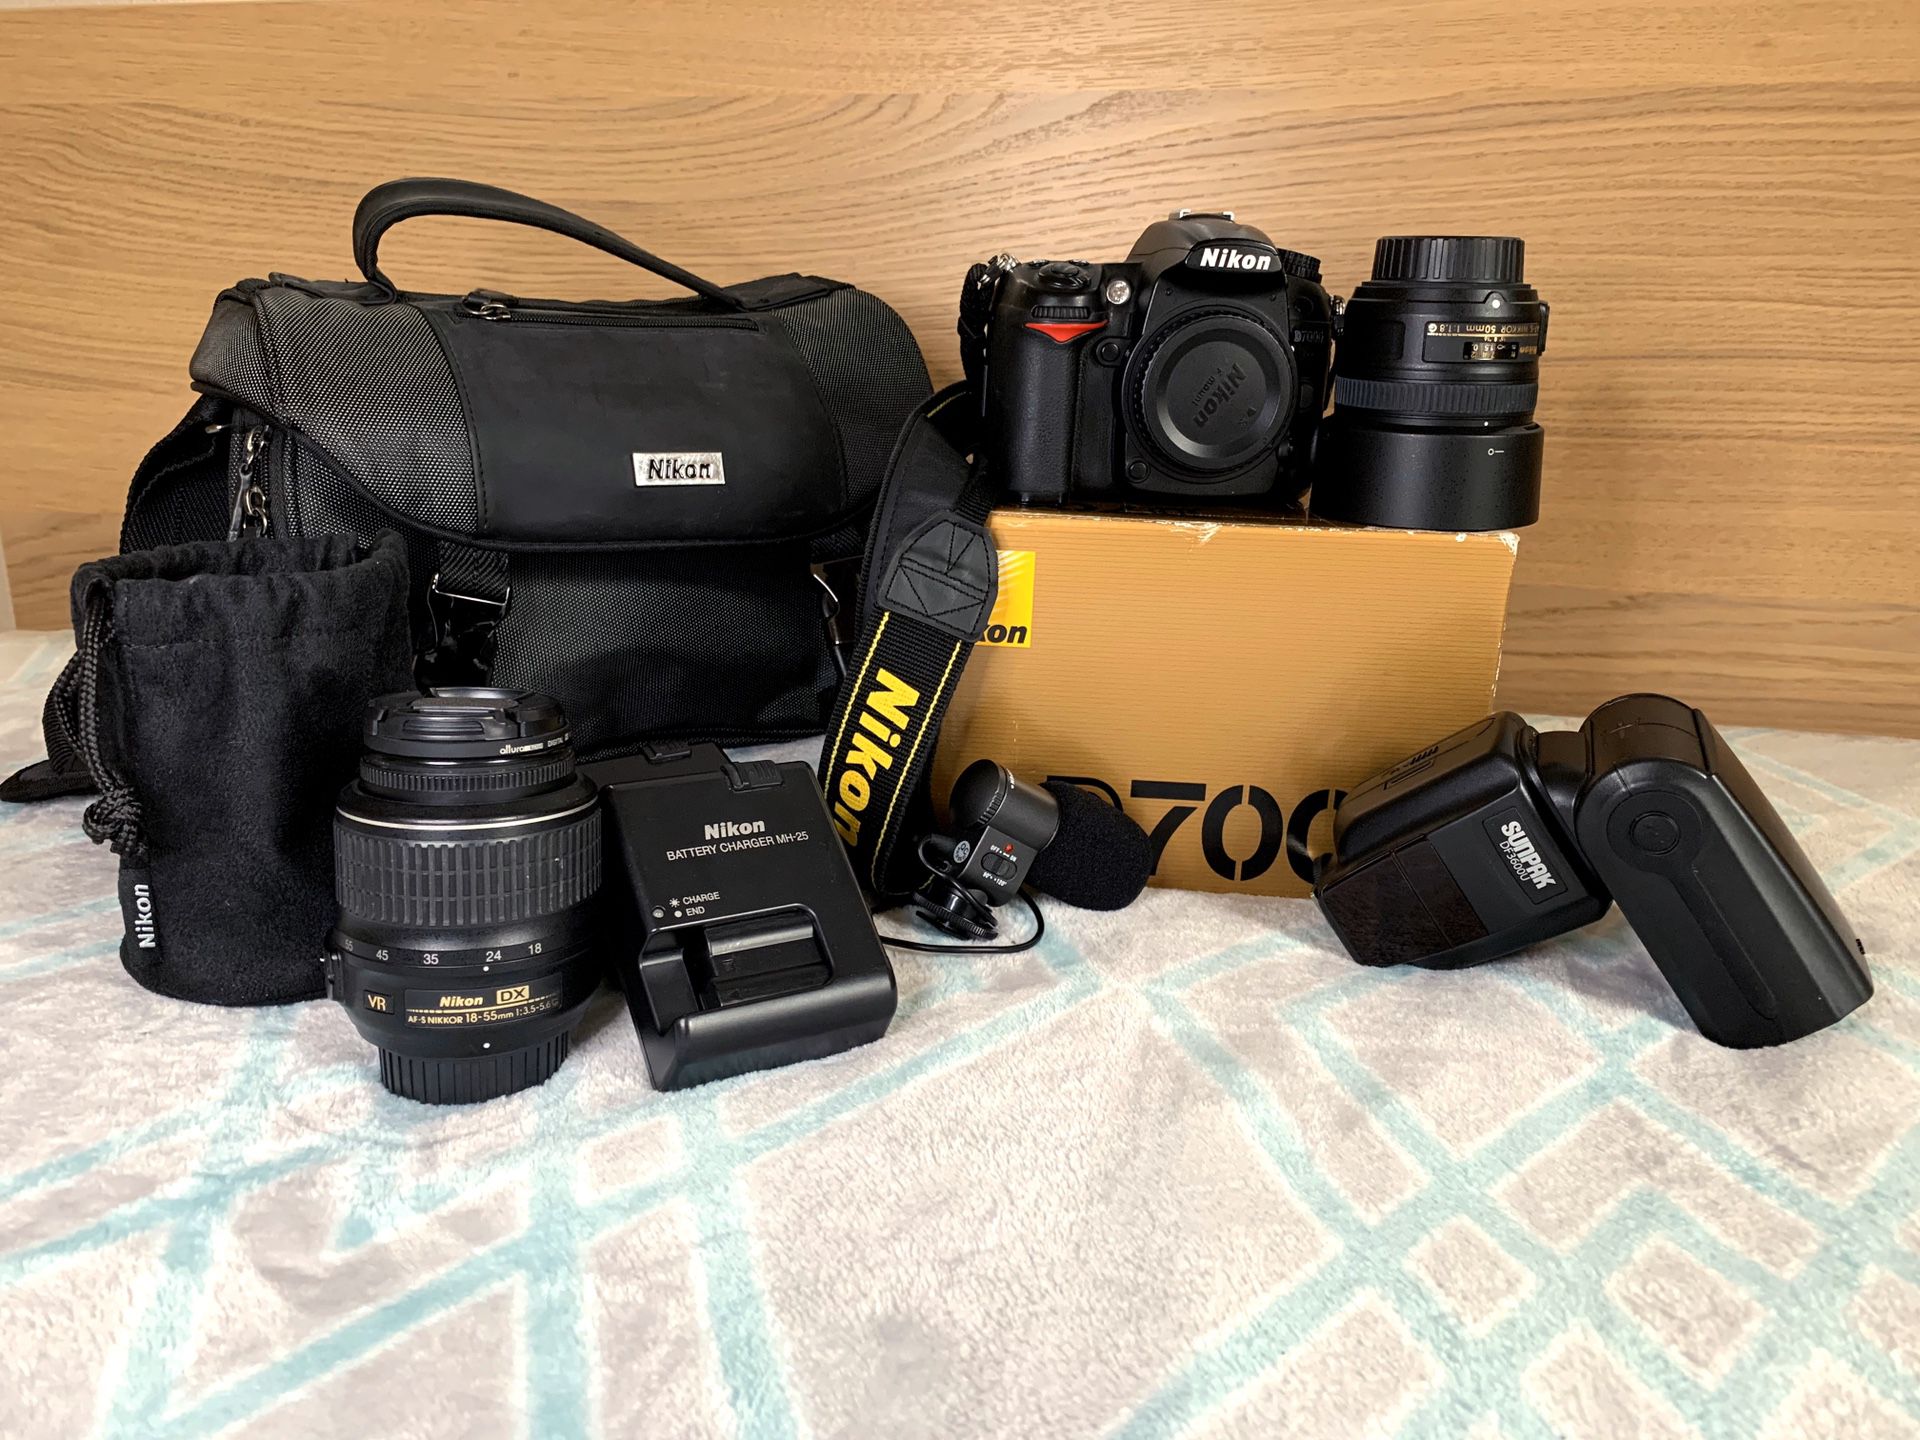 Nikon D7000 16.2 MP Digital SLR Camera